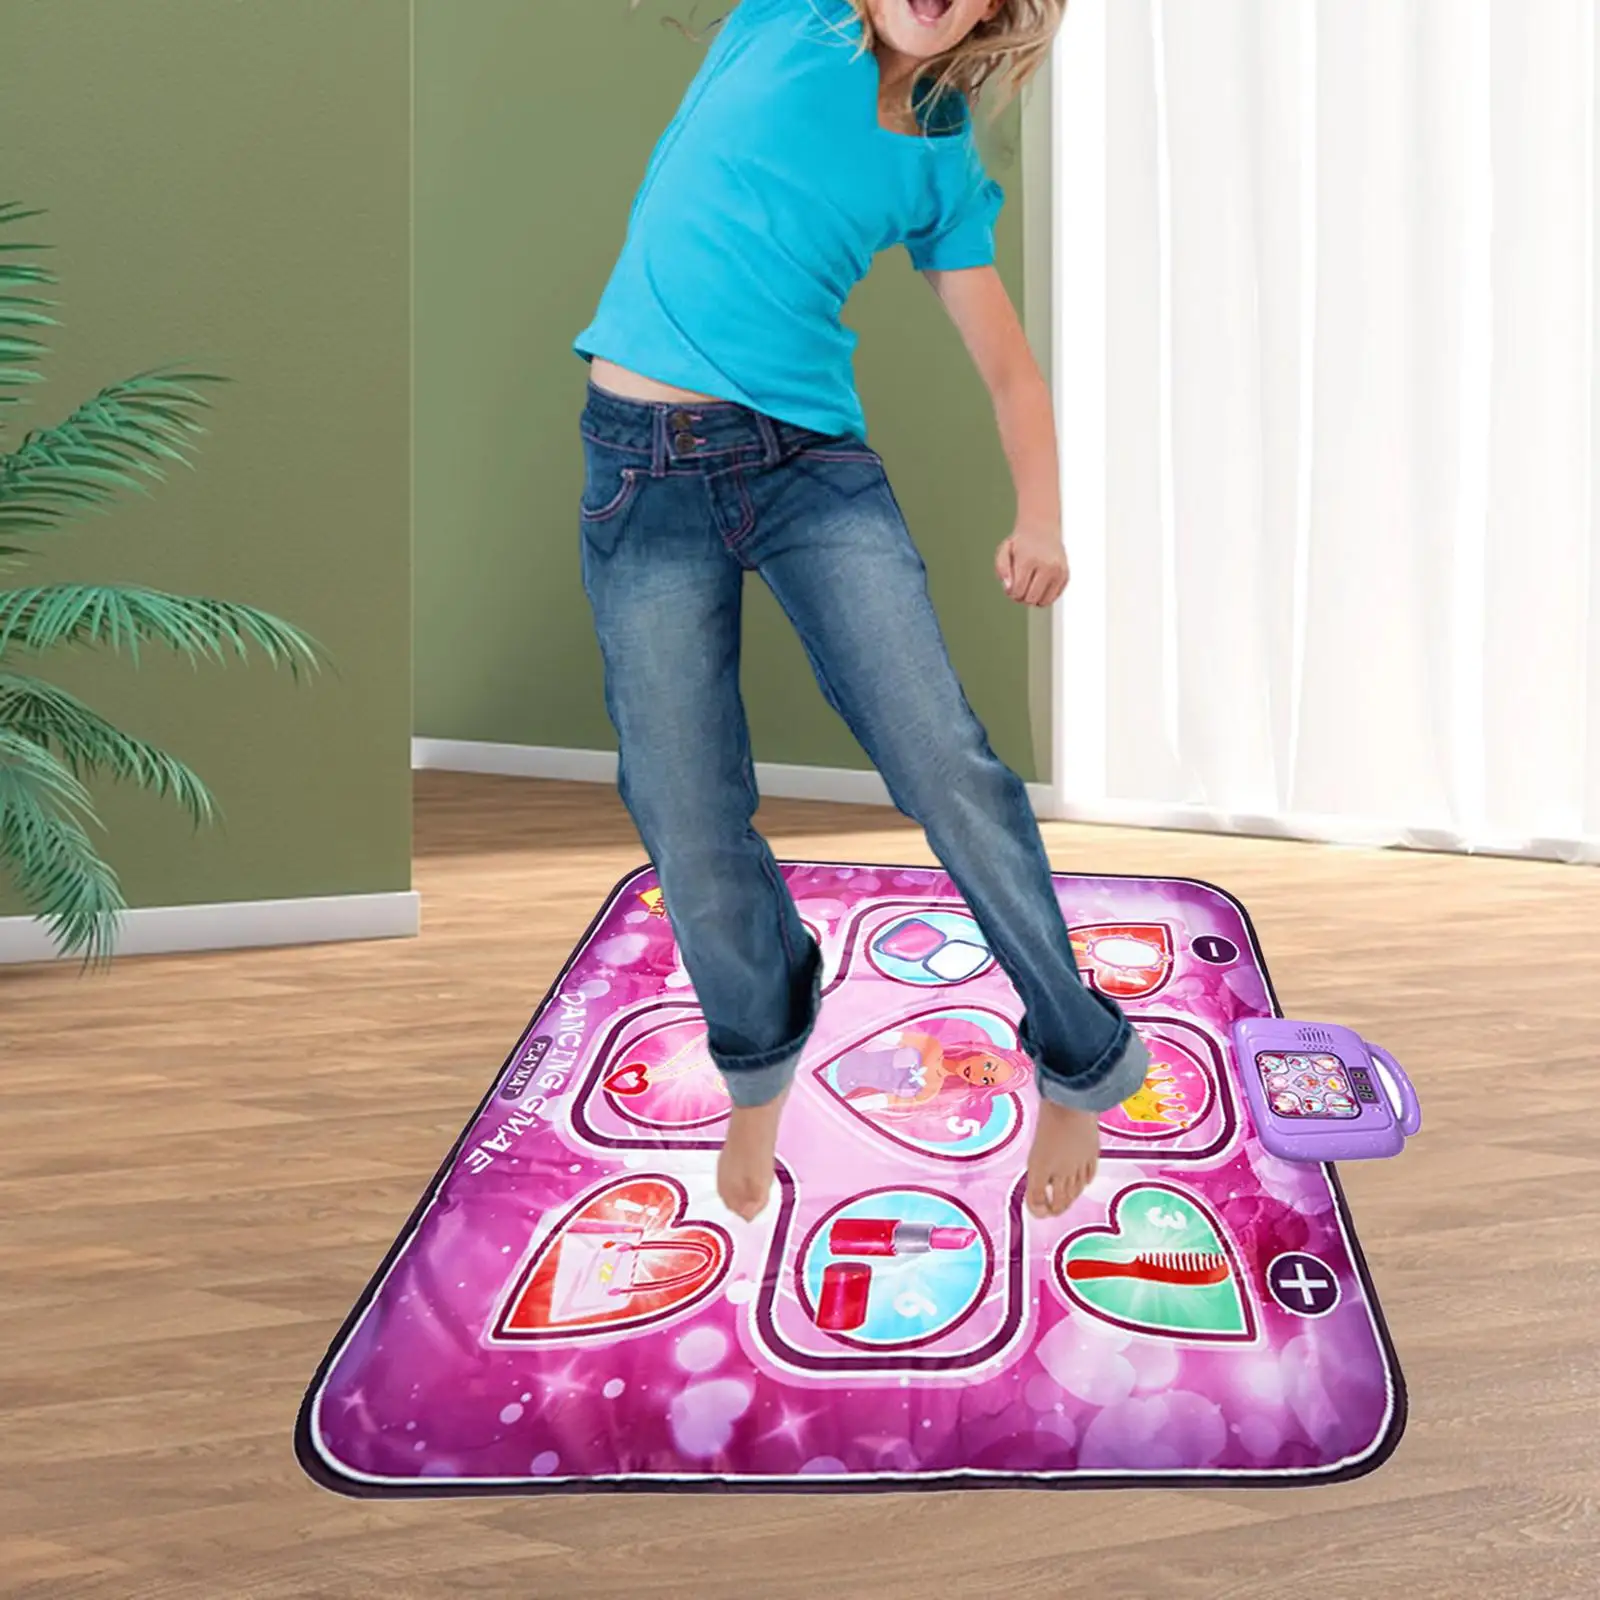 Dancing Game Playmat Portable Electronic Music Dance Pad for Girls Boys Kids